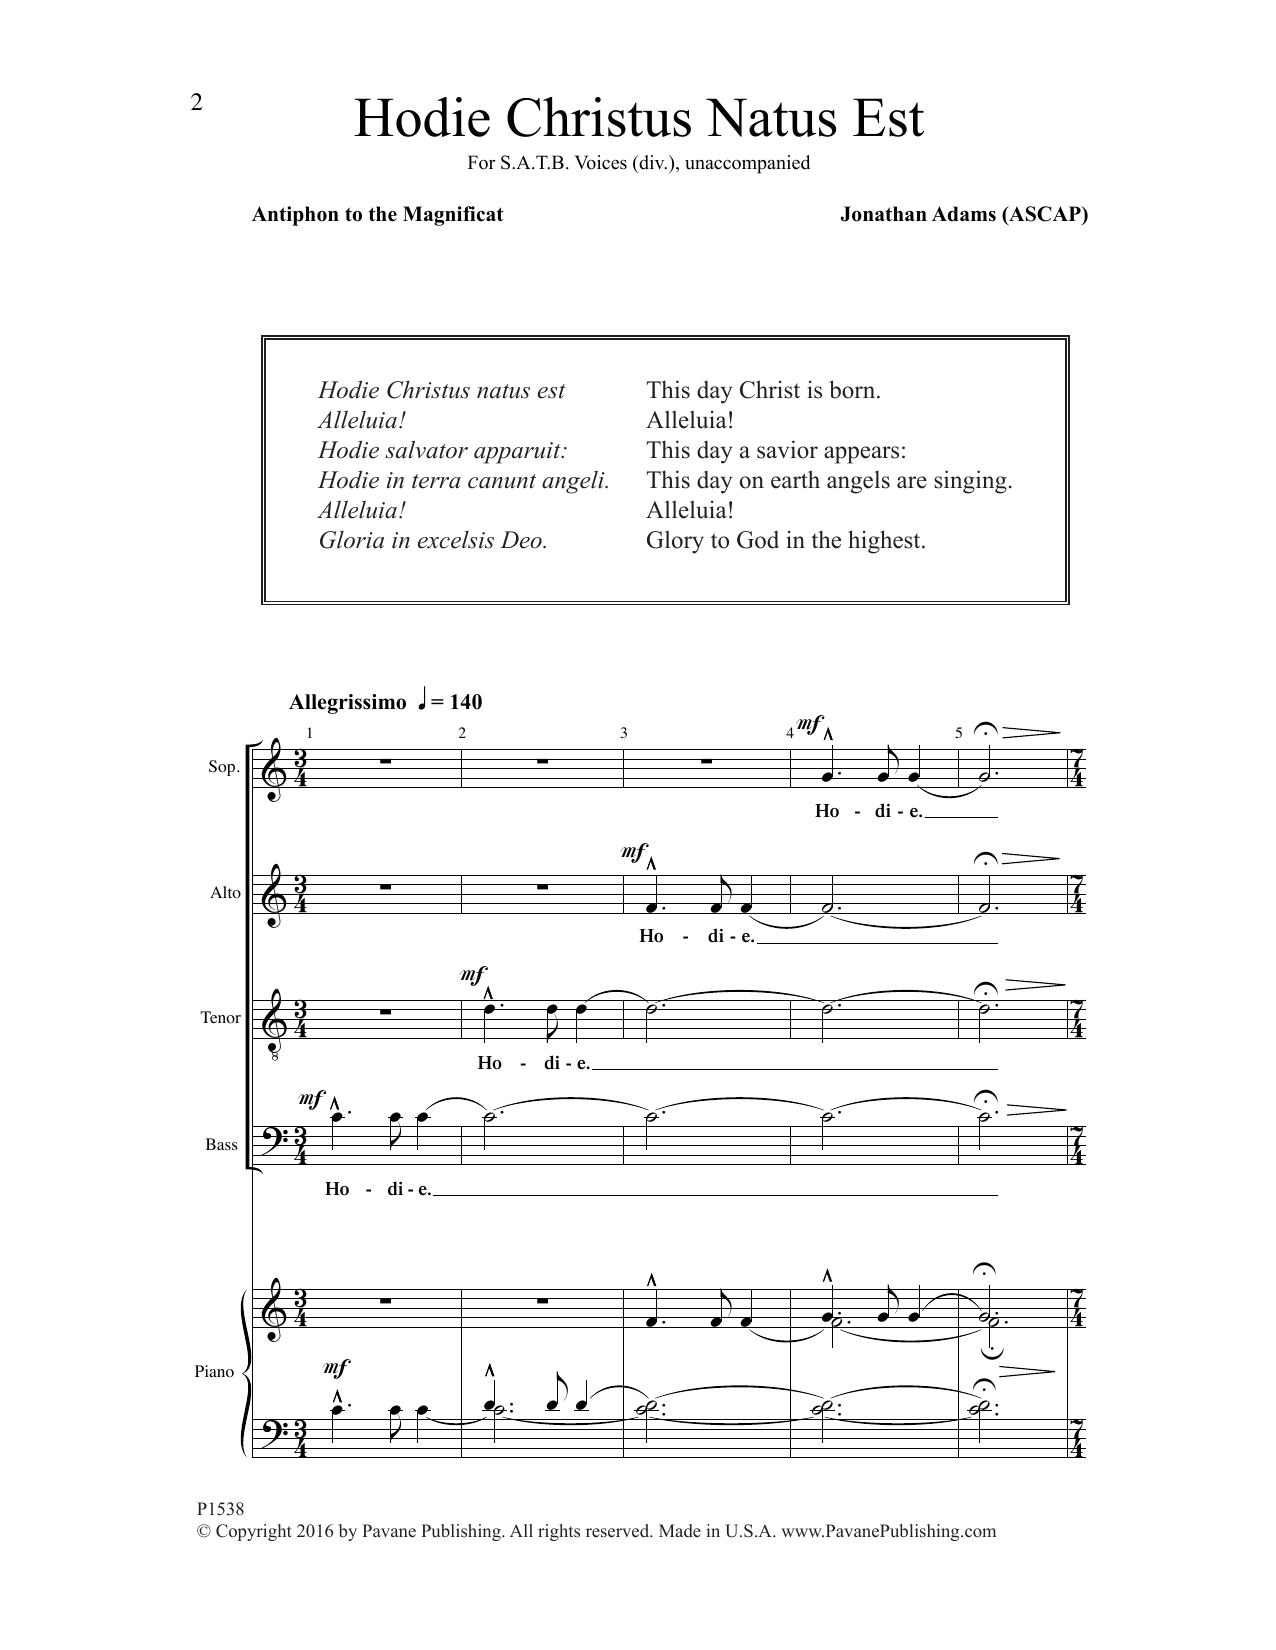 Jonathan Adams Hodie Christus natus est sheet music notes and chords arranged for SATB Choir